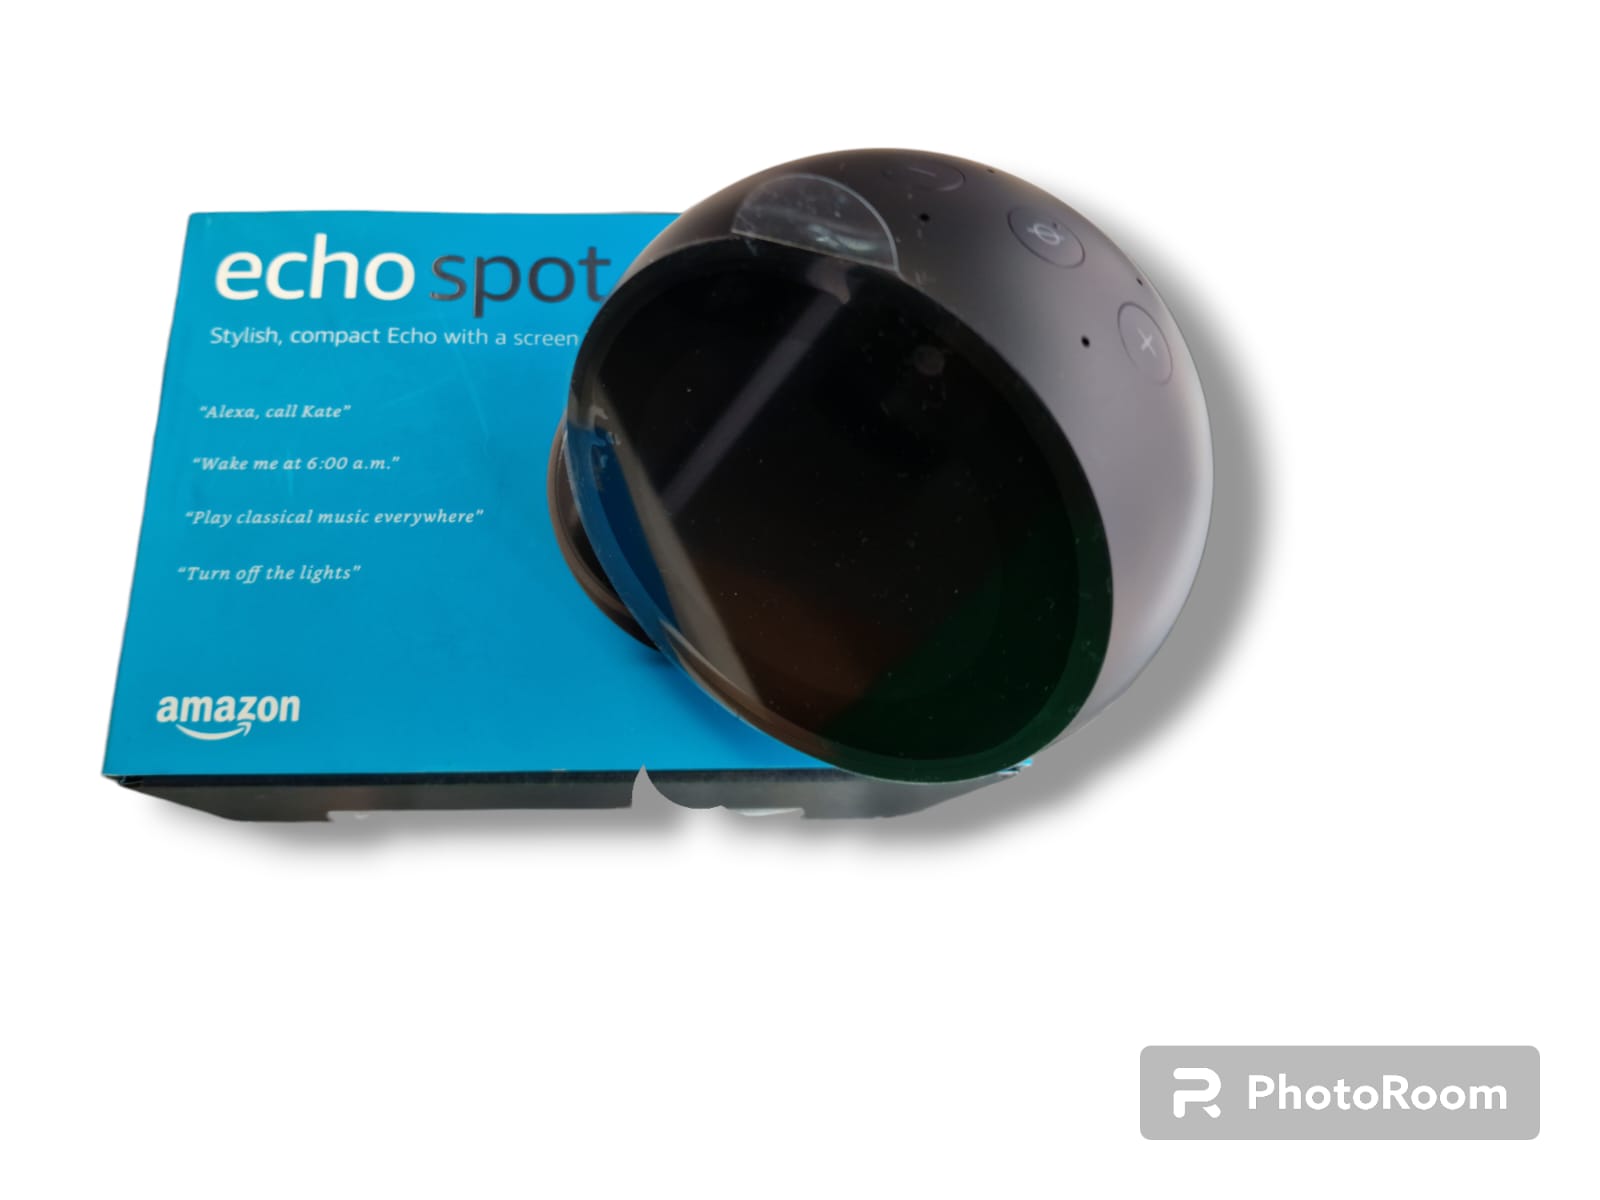 Amazon Echo Spot boxed no charger